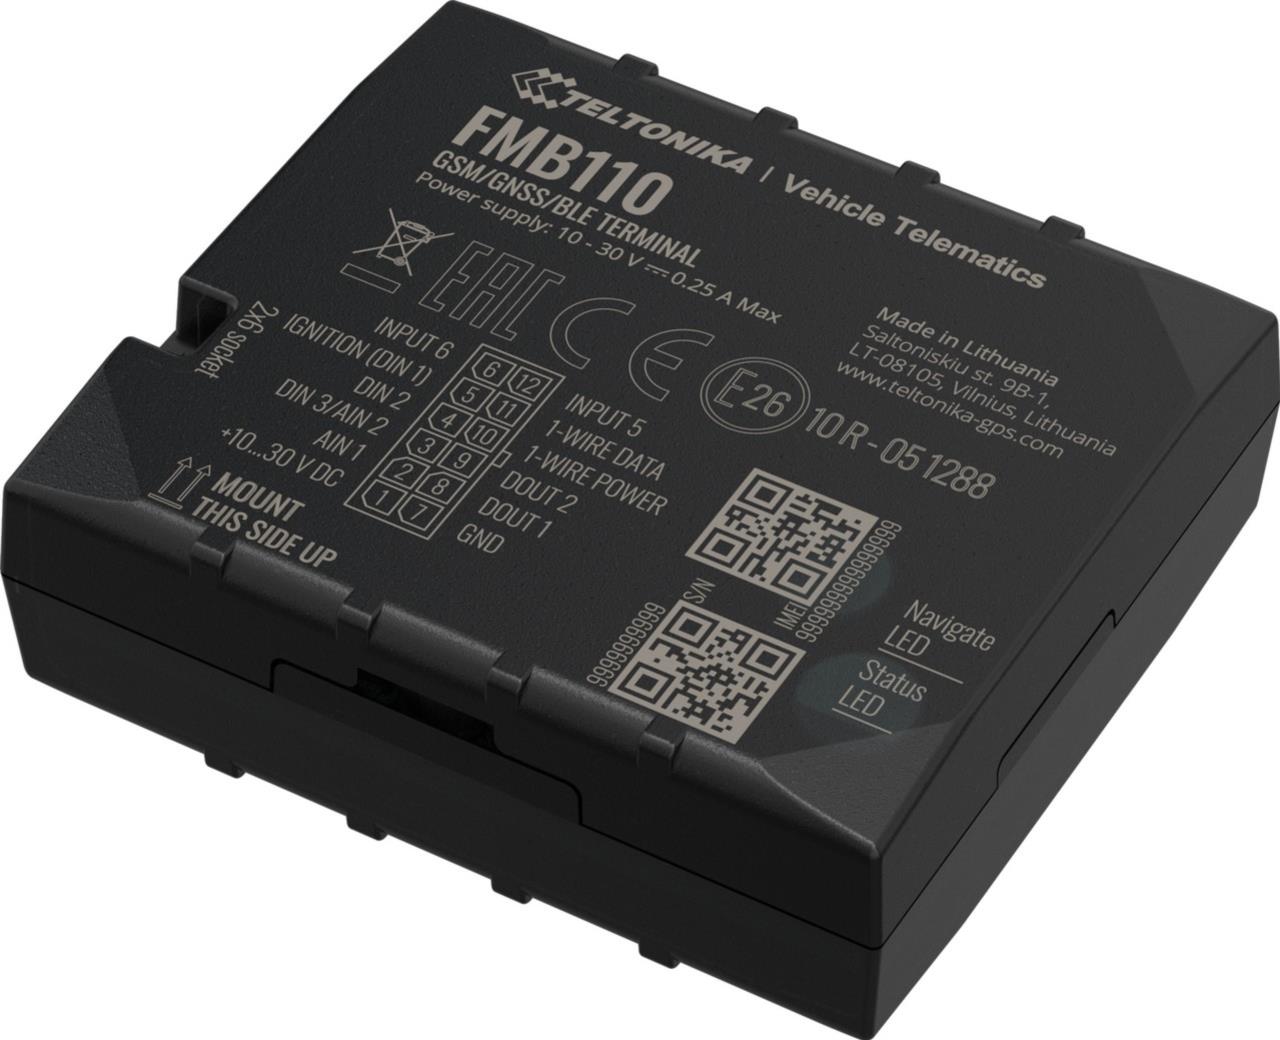 FMB110 GNSS/GSM/Bluetooth Tracker mit interner GNSS/GSM Antenne